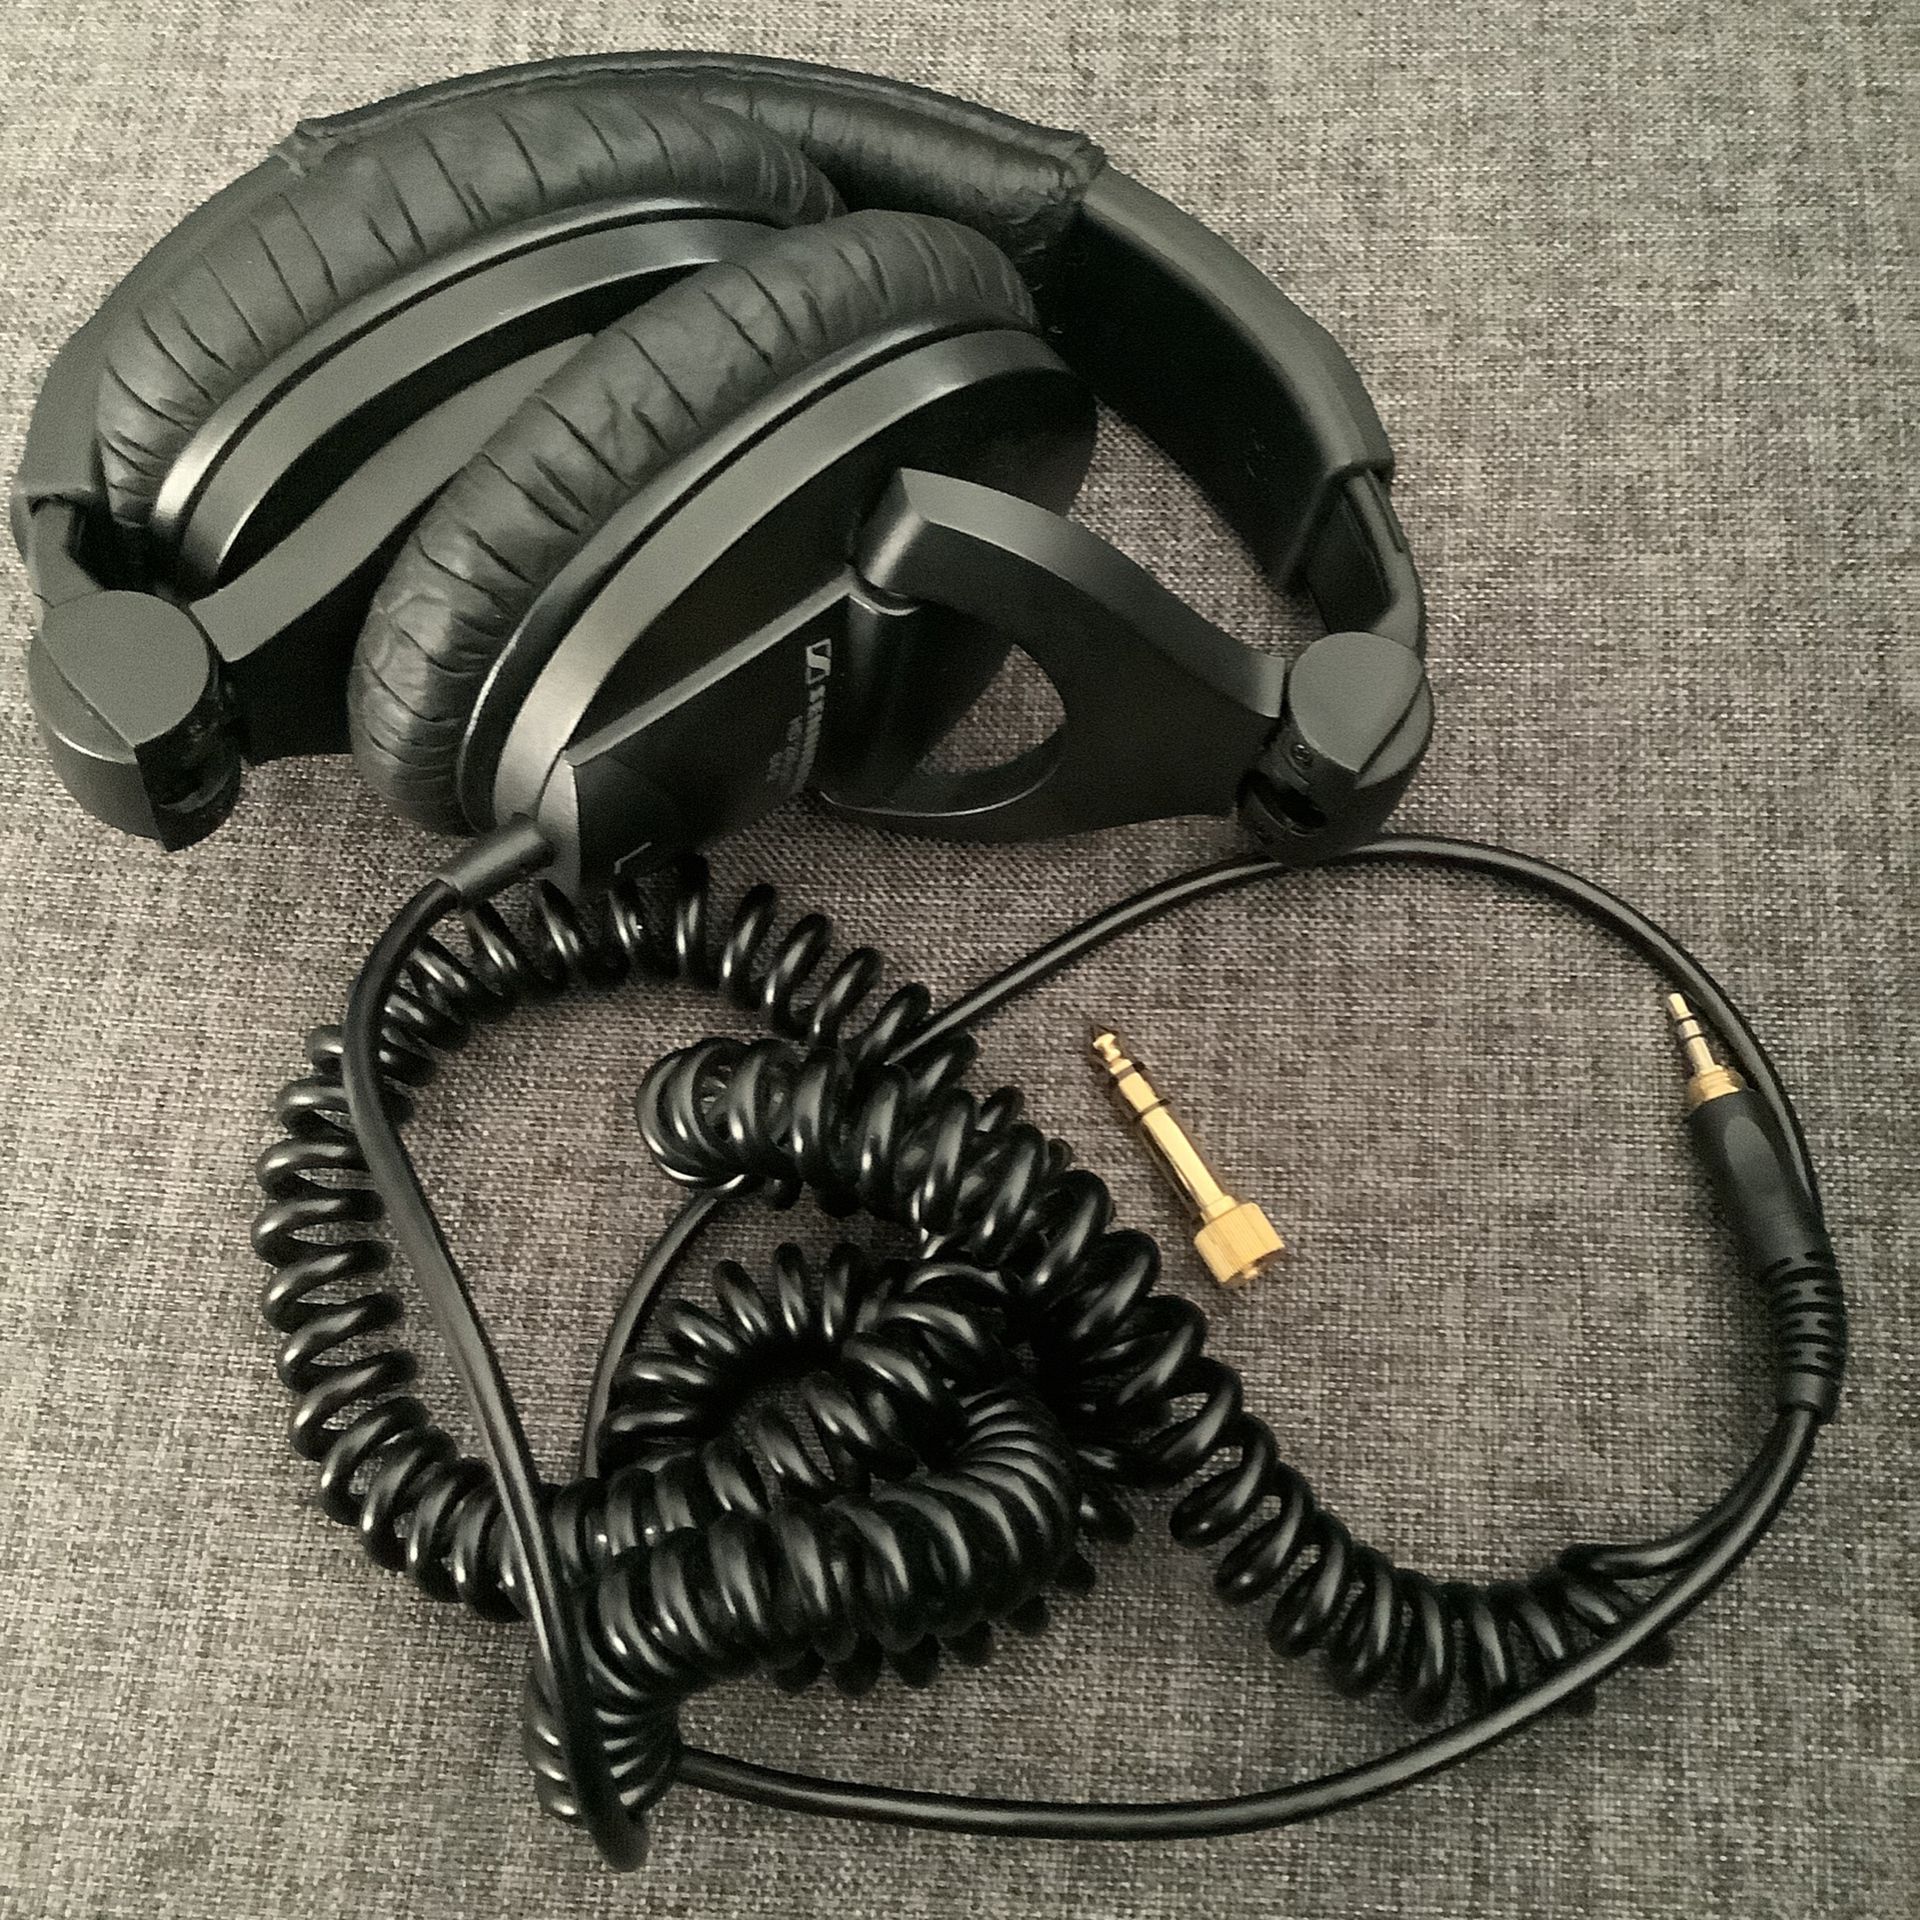 Sennheiser's HD 280 Pro around-the-ear headphone